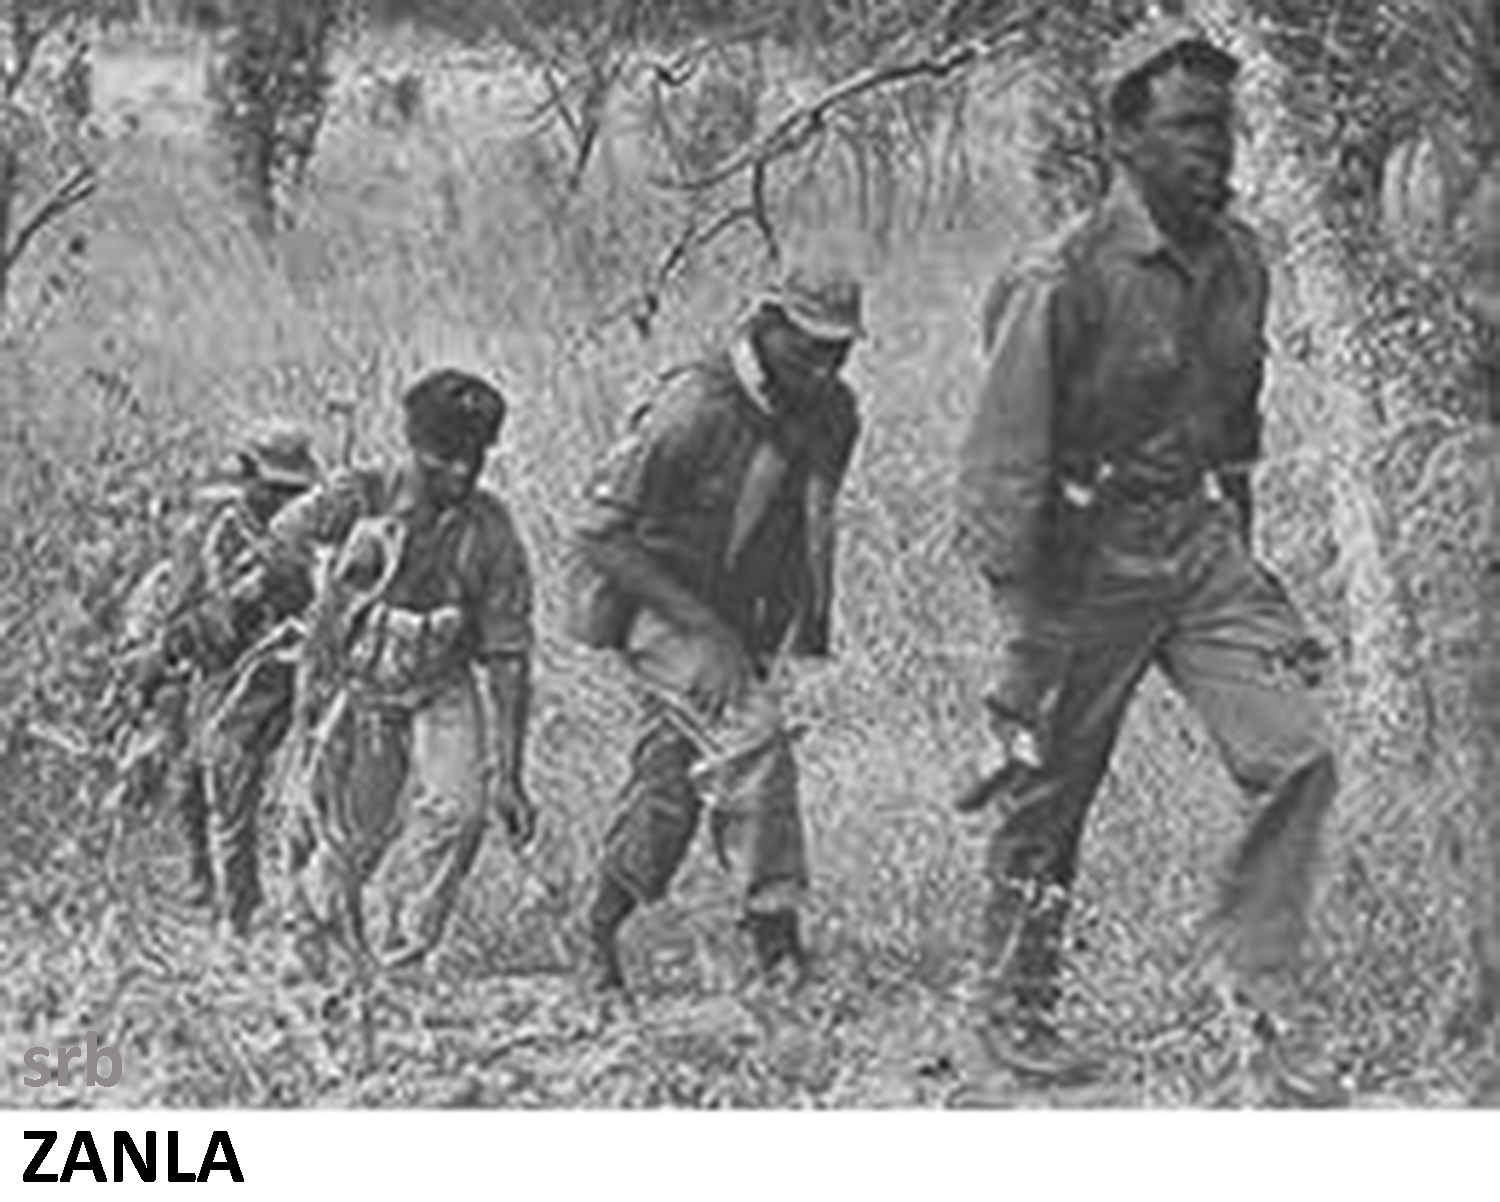 ZANLA gang of 1960s